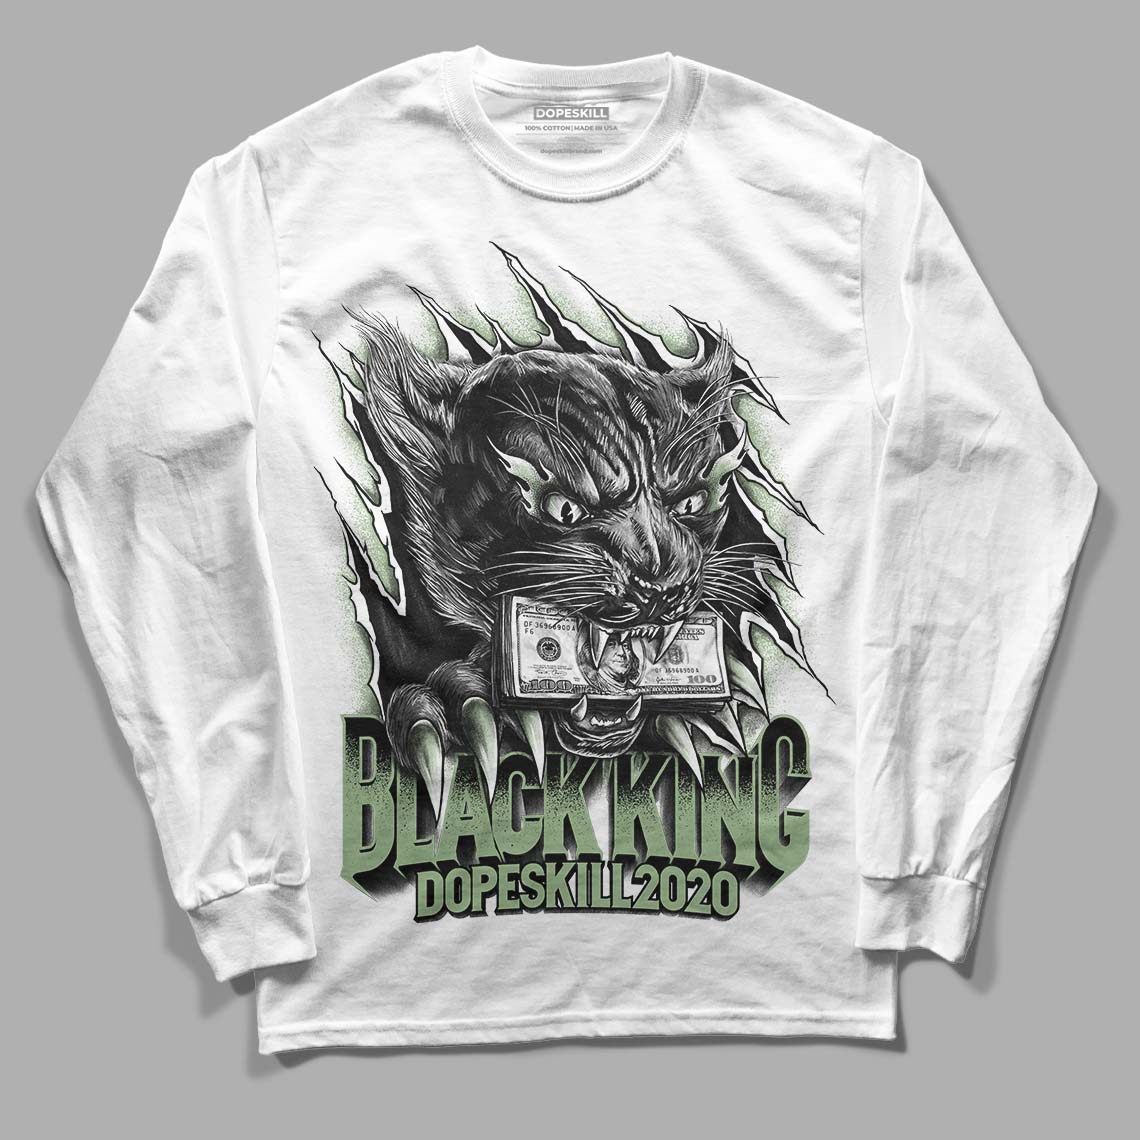 Jordan 4 Retro “Seafoam” SDopeSkill Sweatshirt Black King Graphic Graphic Streetwear - White 